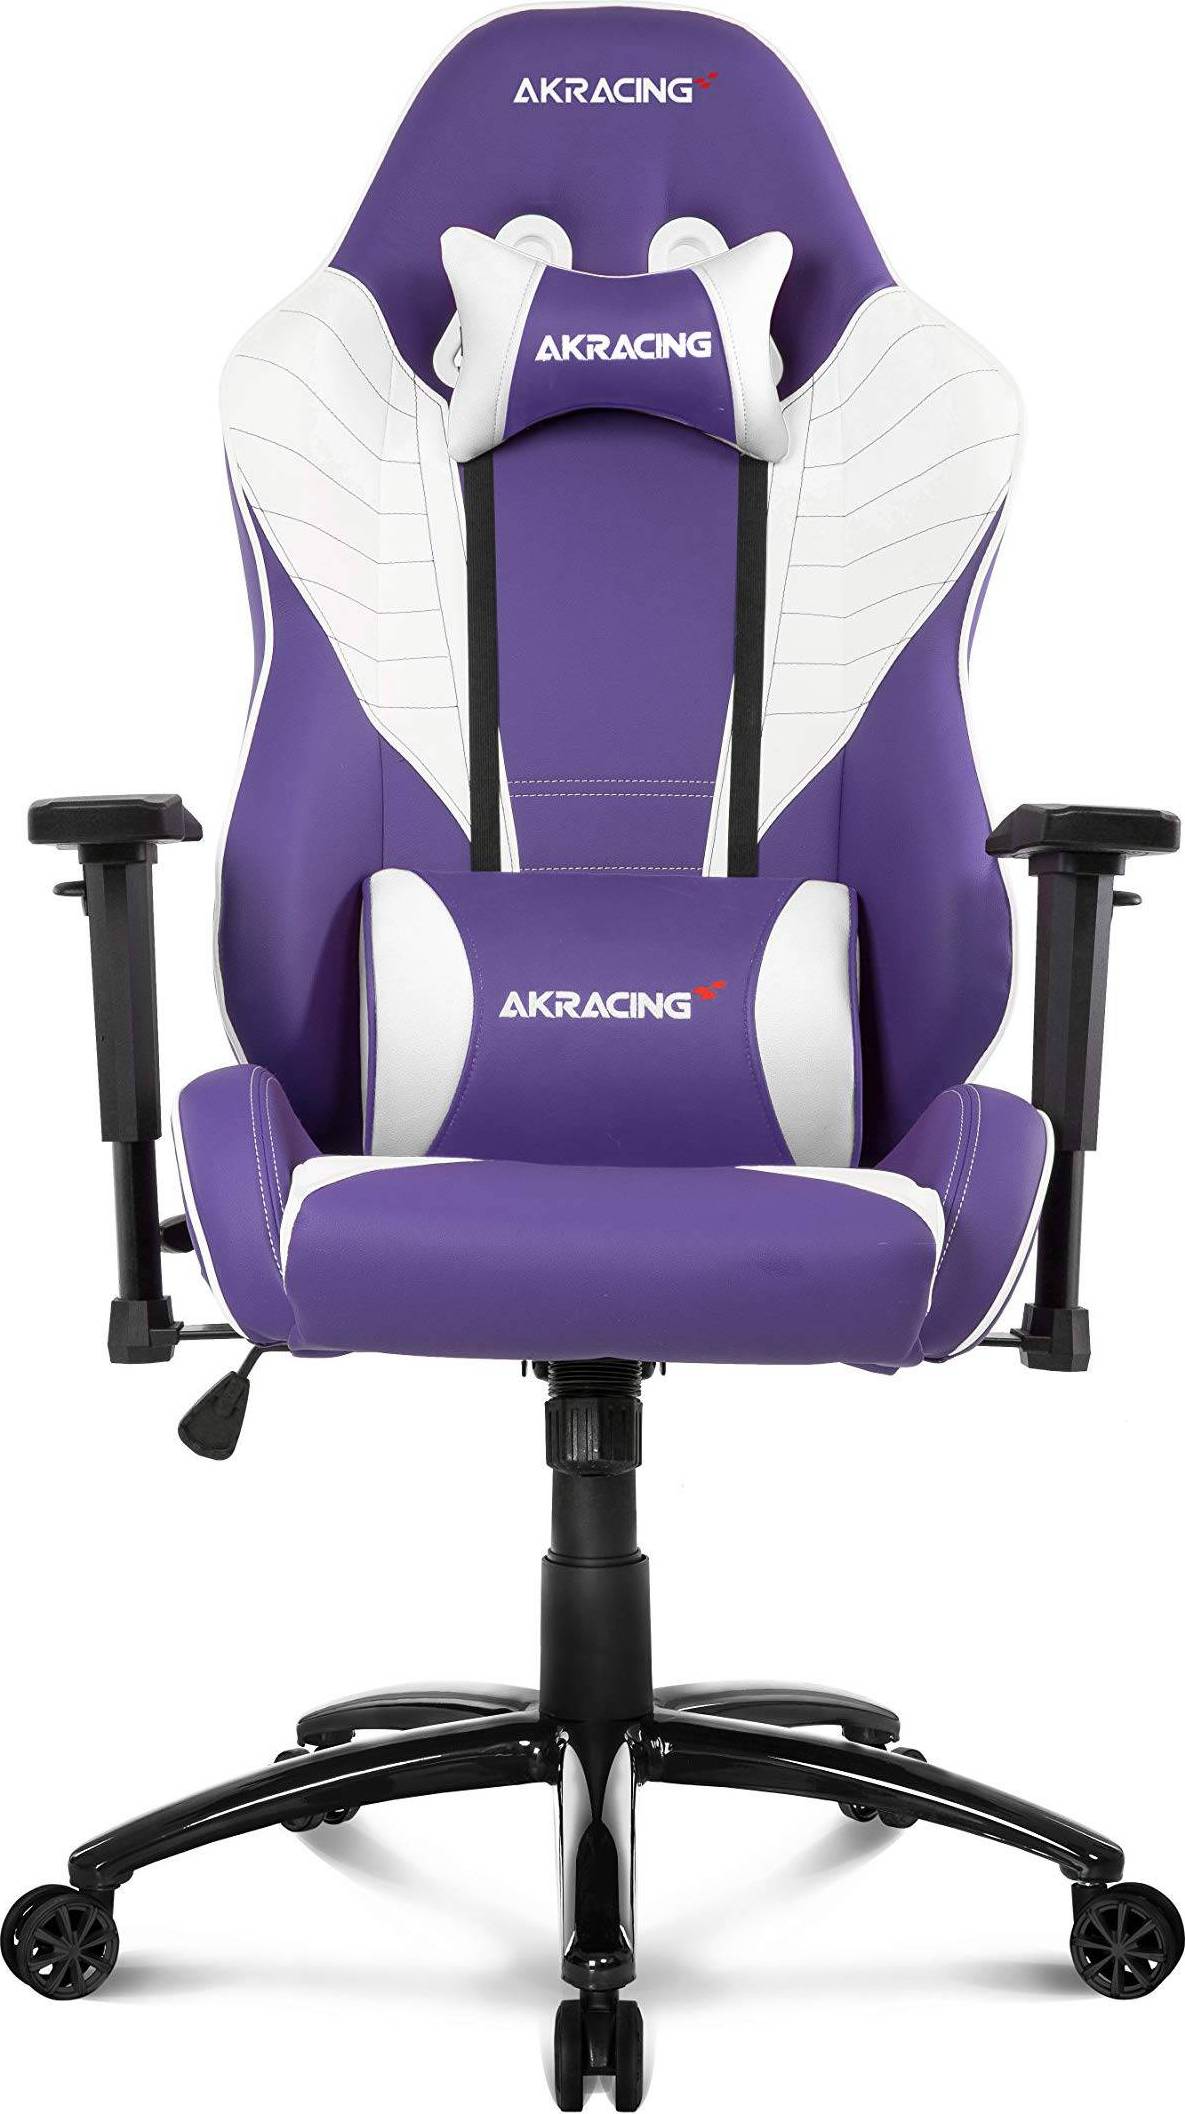  Bild på AKracing SX Gaming Chair - White/Purple gamingstol